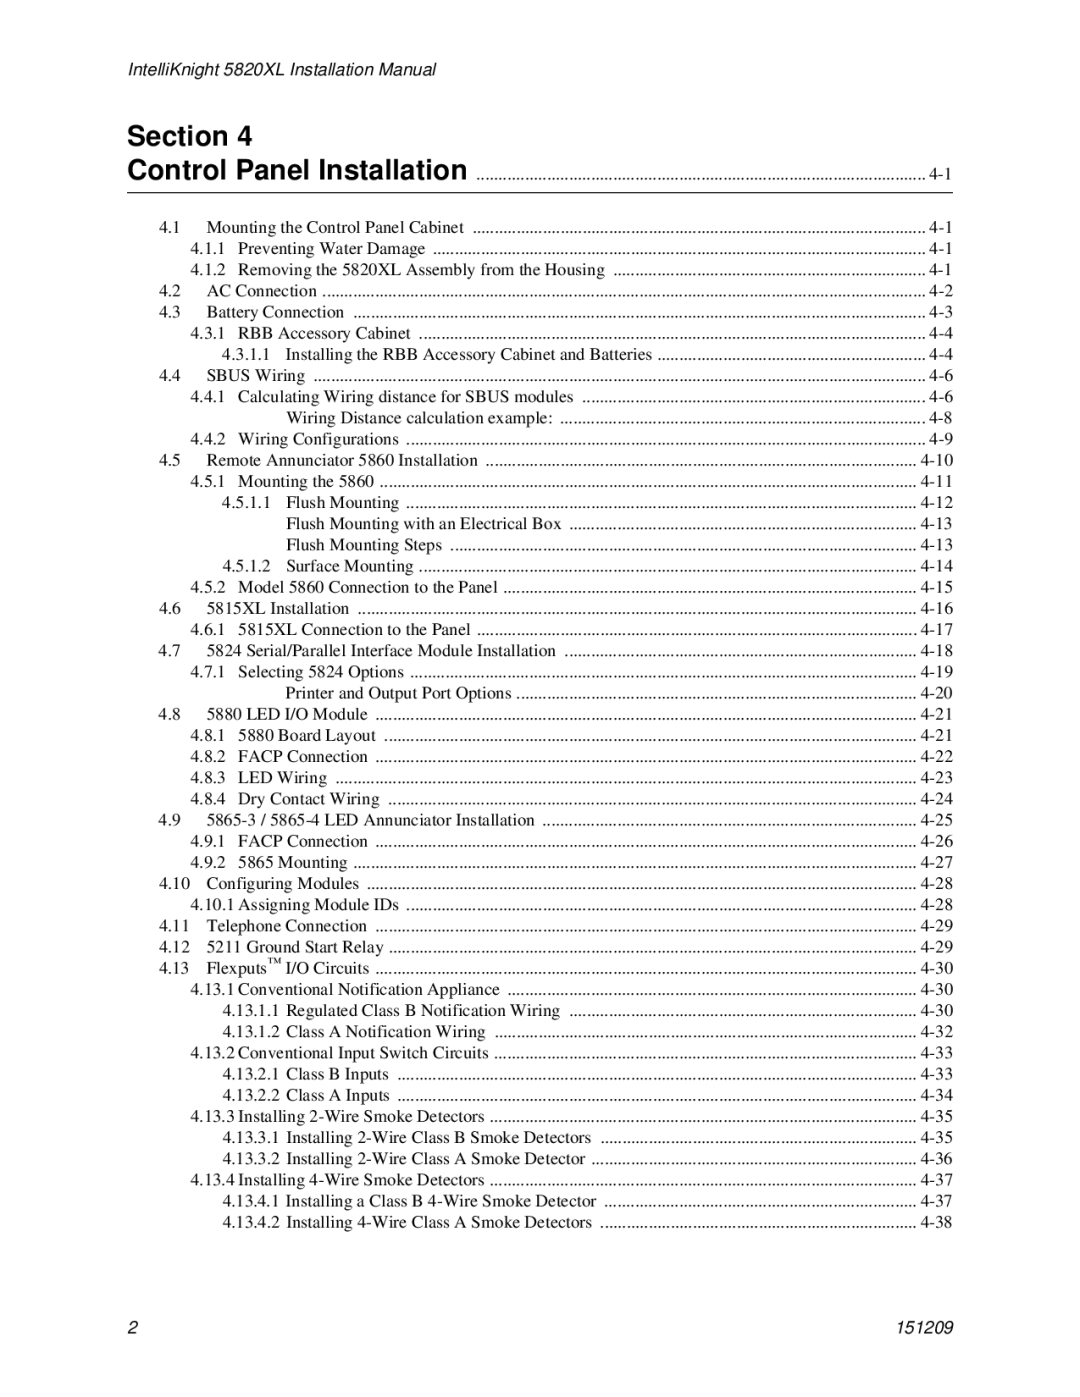 Honeywell manual IntelliKnight 5820XL Installation Manual 